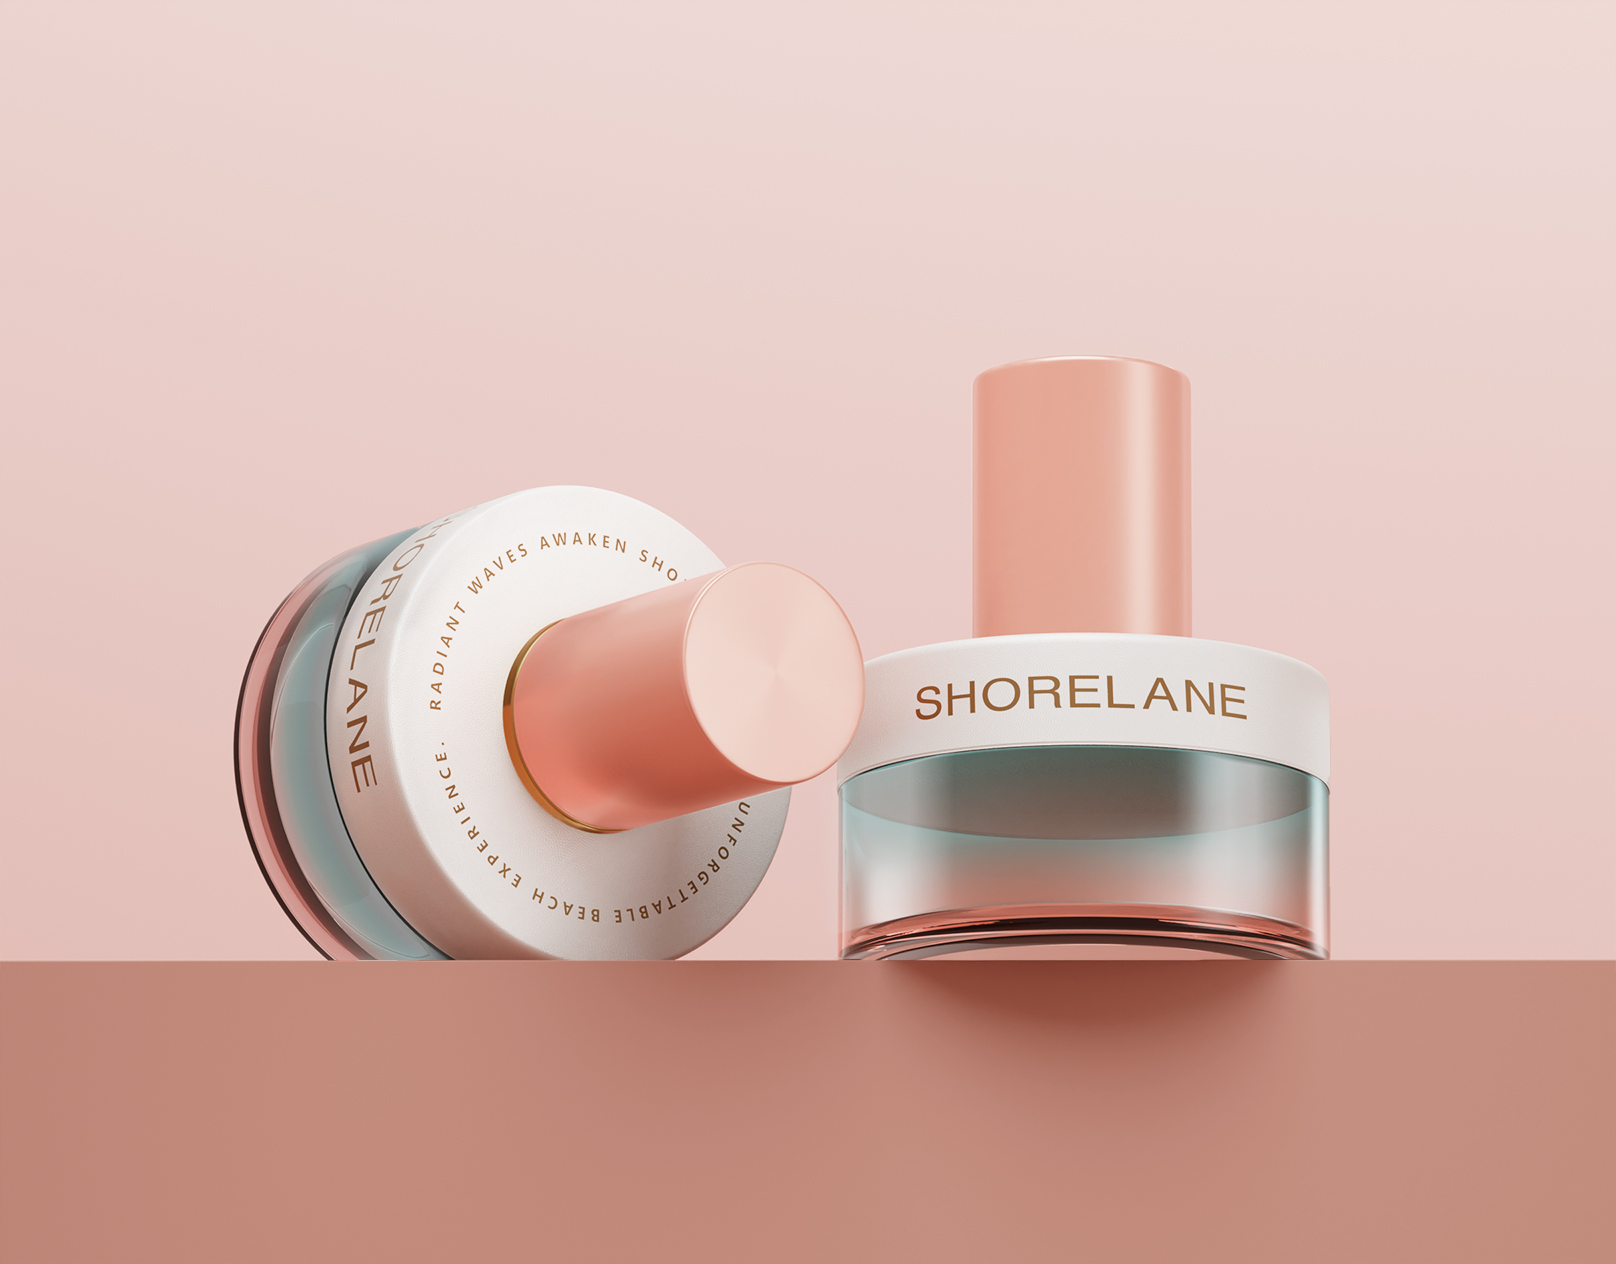 ShoreLane Capturing Coastal Magic in Luxurious Perfumes and Skincare